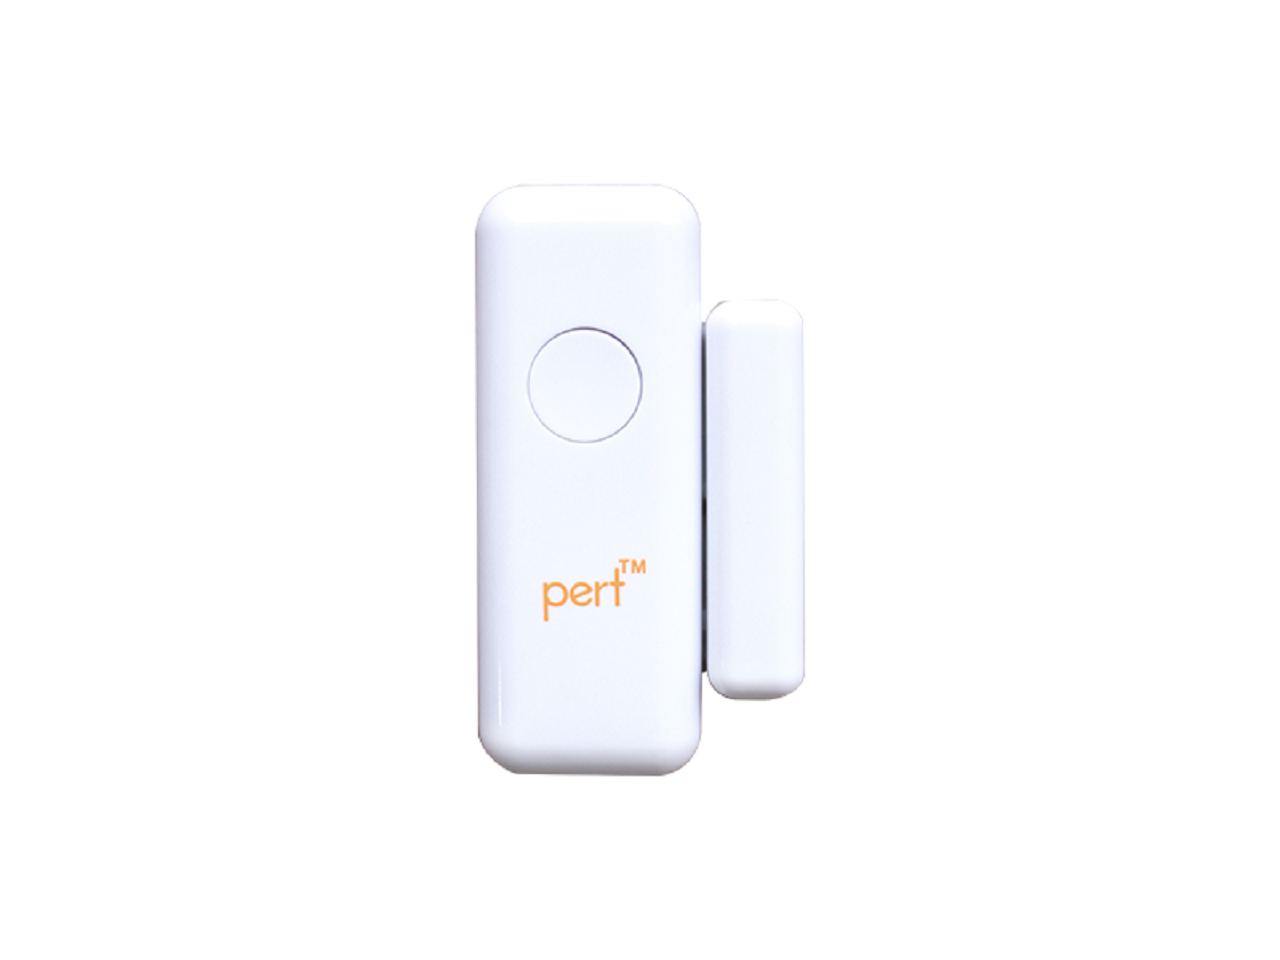 Pert Door Sensor from Pert Home Automation